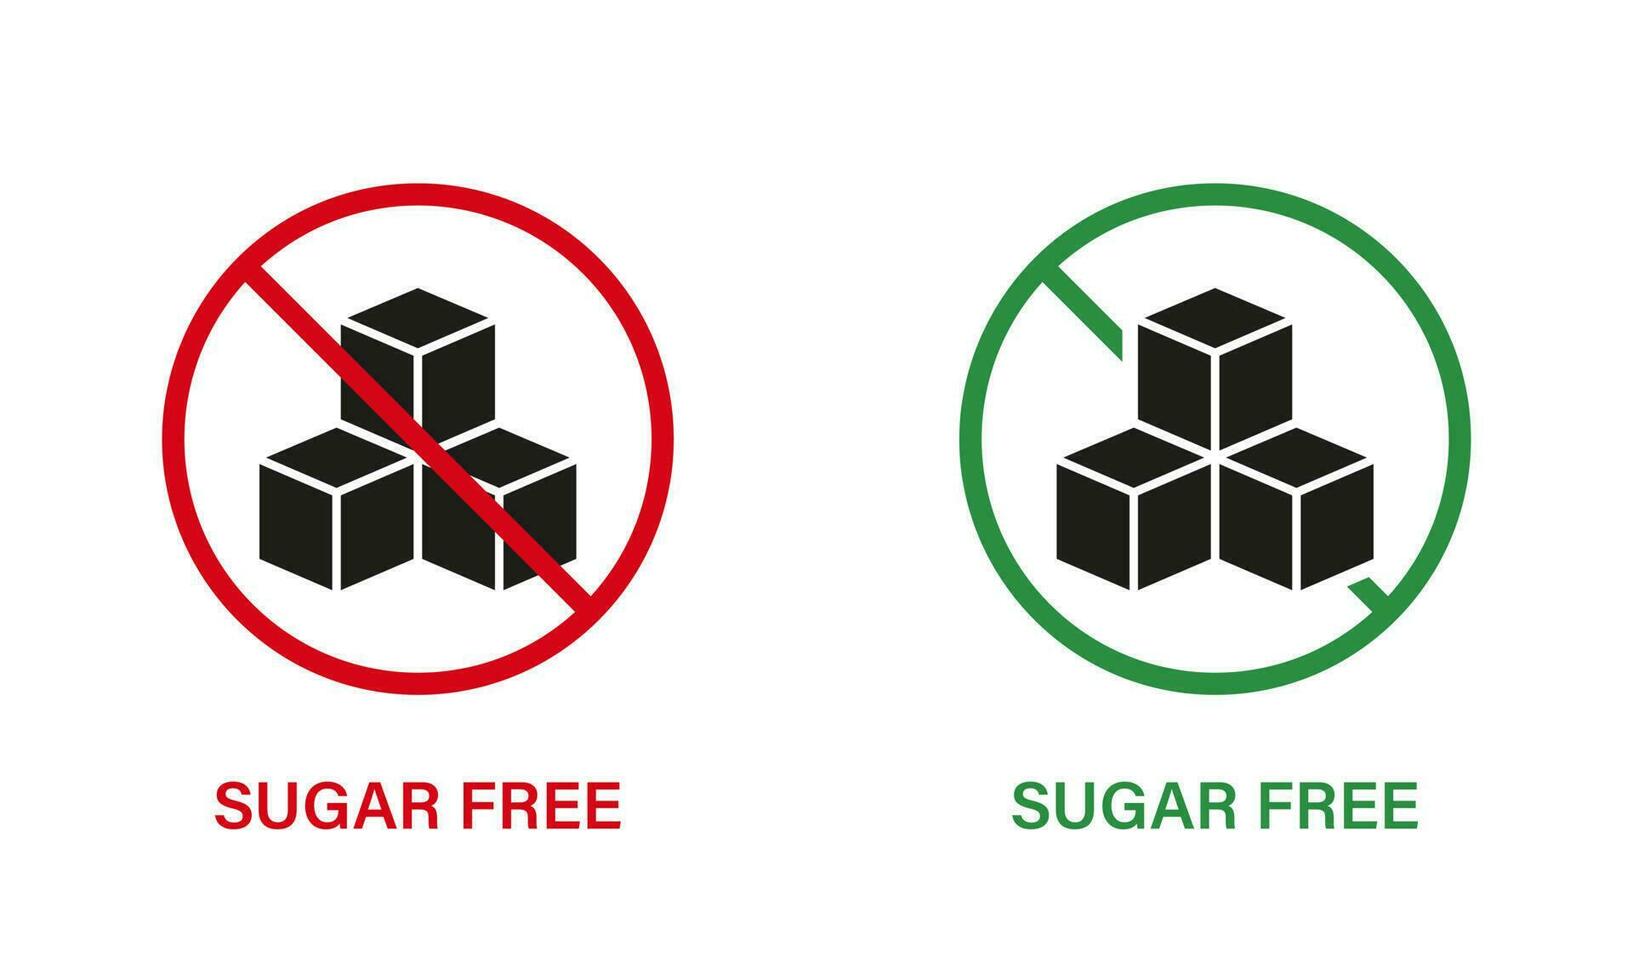 azúcar gratis silueta icono colocar. comida No adicional azúcar con detener signo. glucosa prohibido símbolo. cero glucosa garantizar logo. No azúcar para diabético producto etiqueta. aislado vector ilustración.